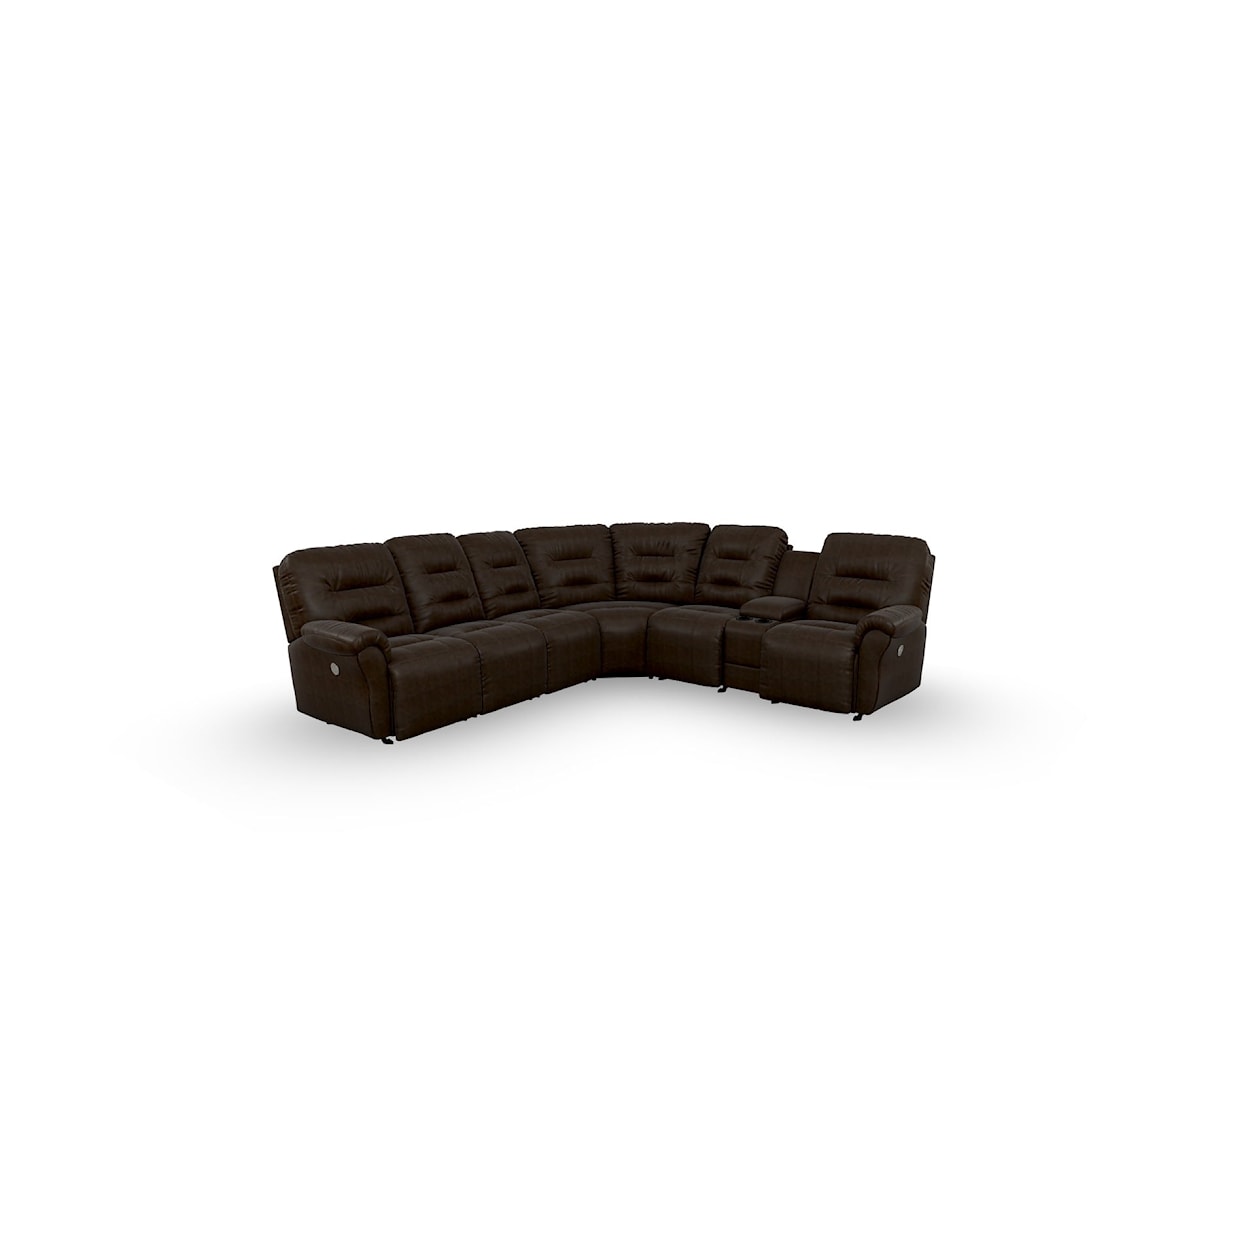 Bravo Furniture Unity 5-Seat Reclining Sectional Sofa